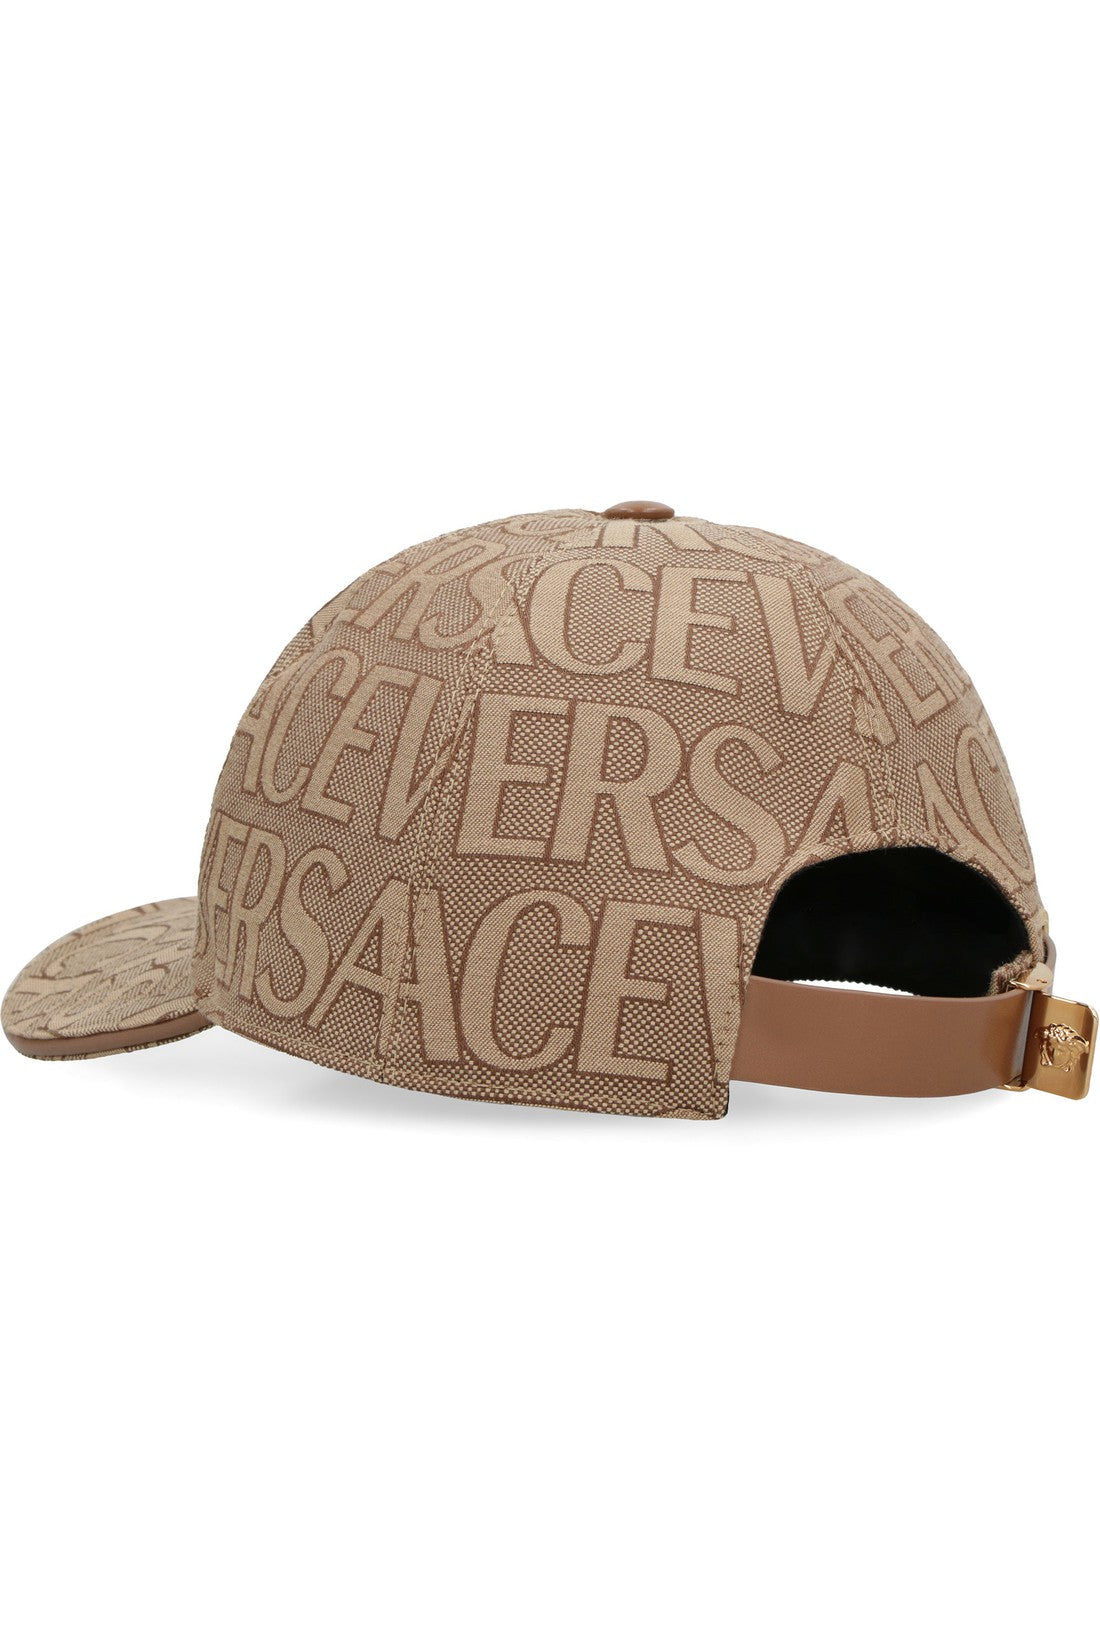 Versace-OUTLET-SALE-All over logo baseball cap-ARCHIVIST